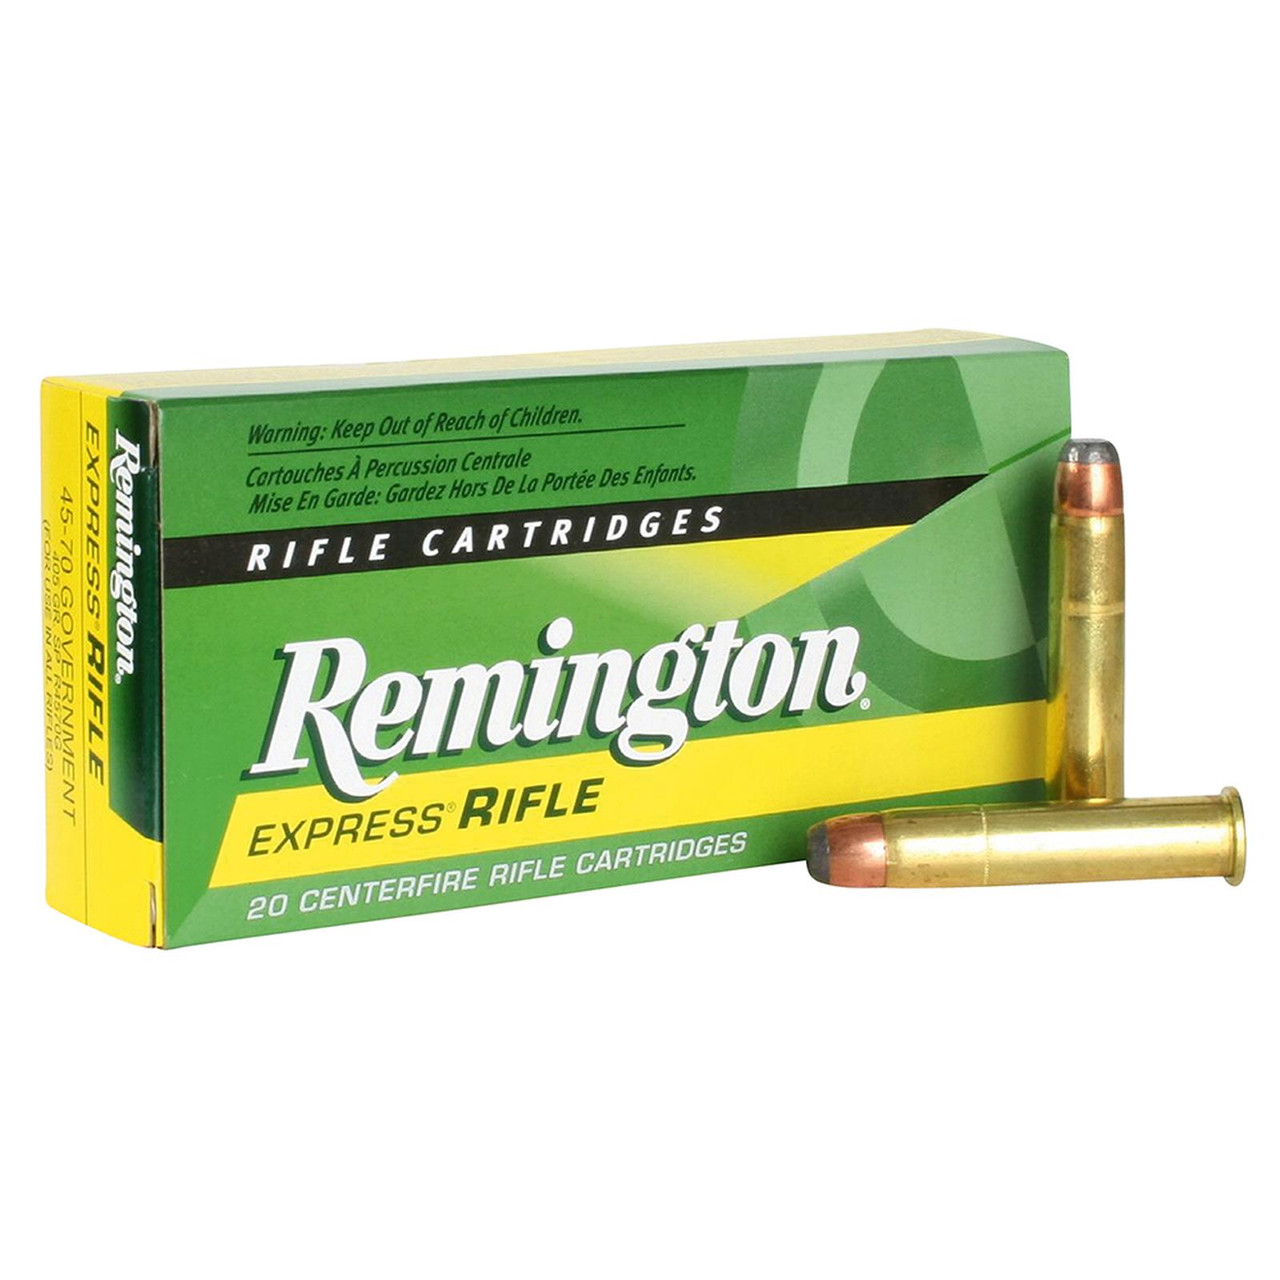 45-70 405gr RNFP Plated Bullets